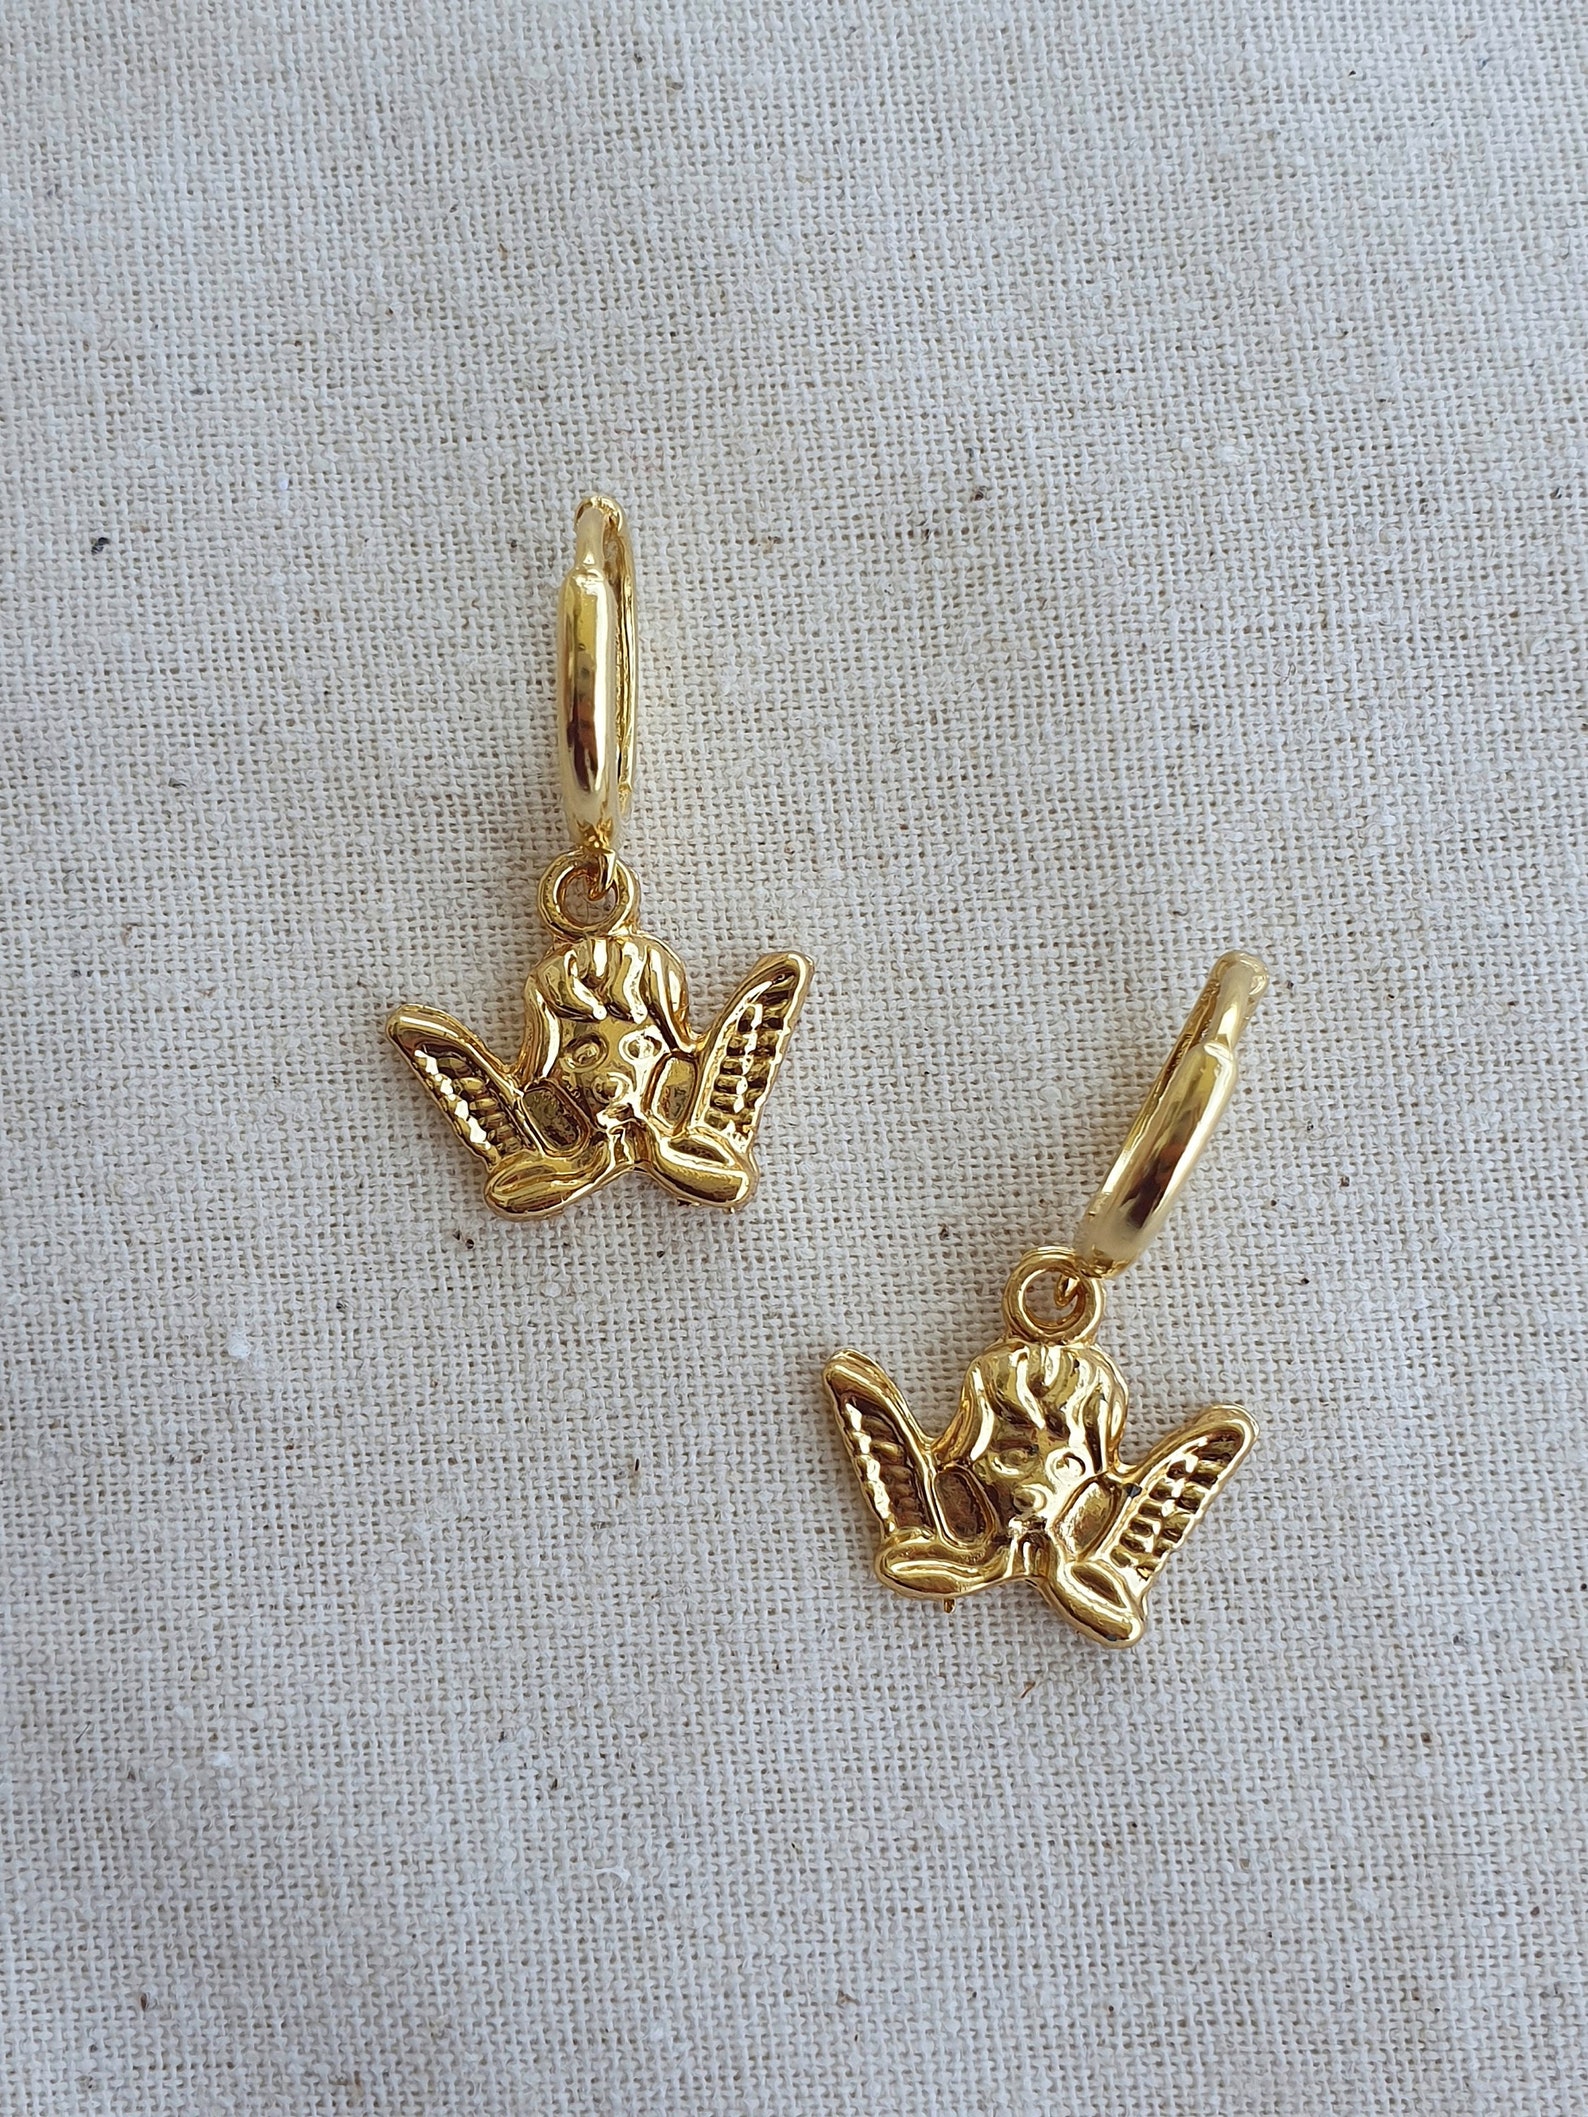 Gold Cherub Earrings 18k Gold Plated Earrings Dangle | Etsy